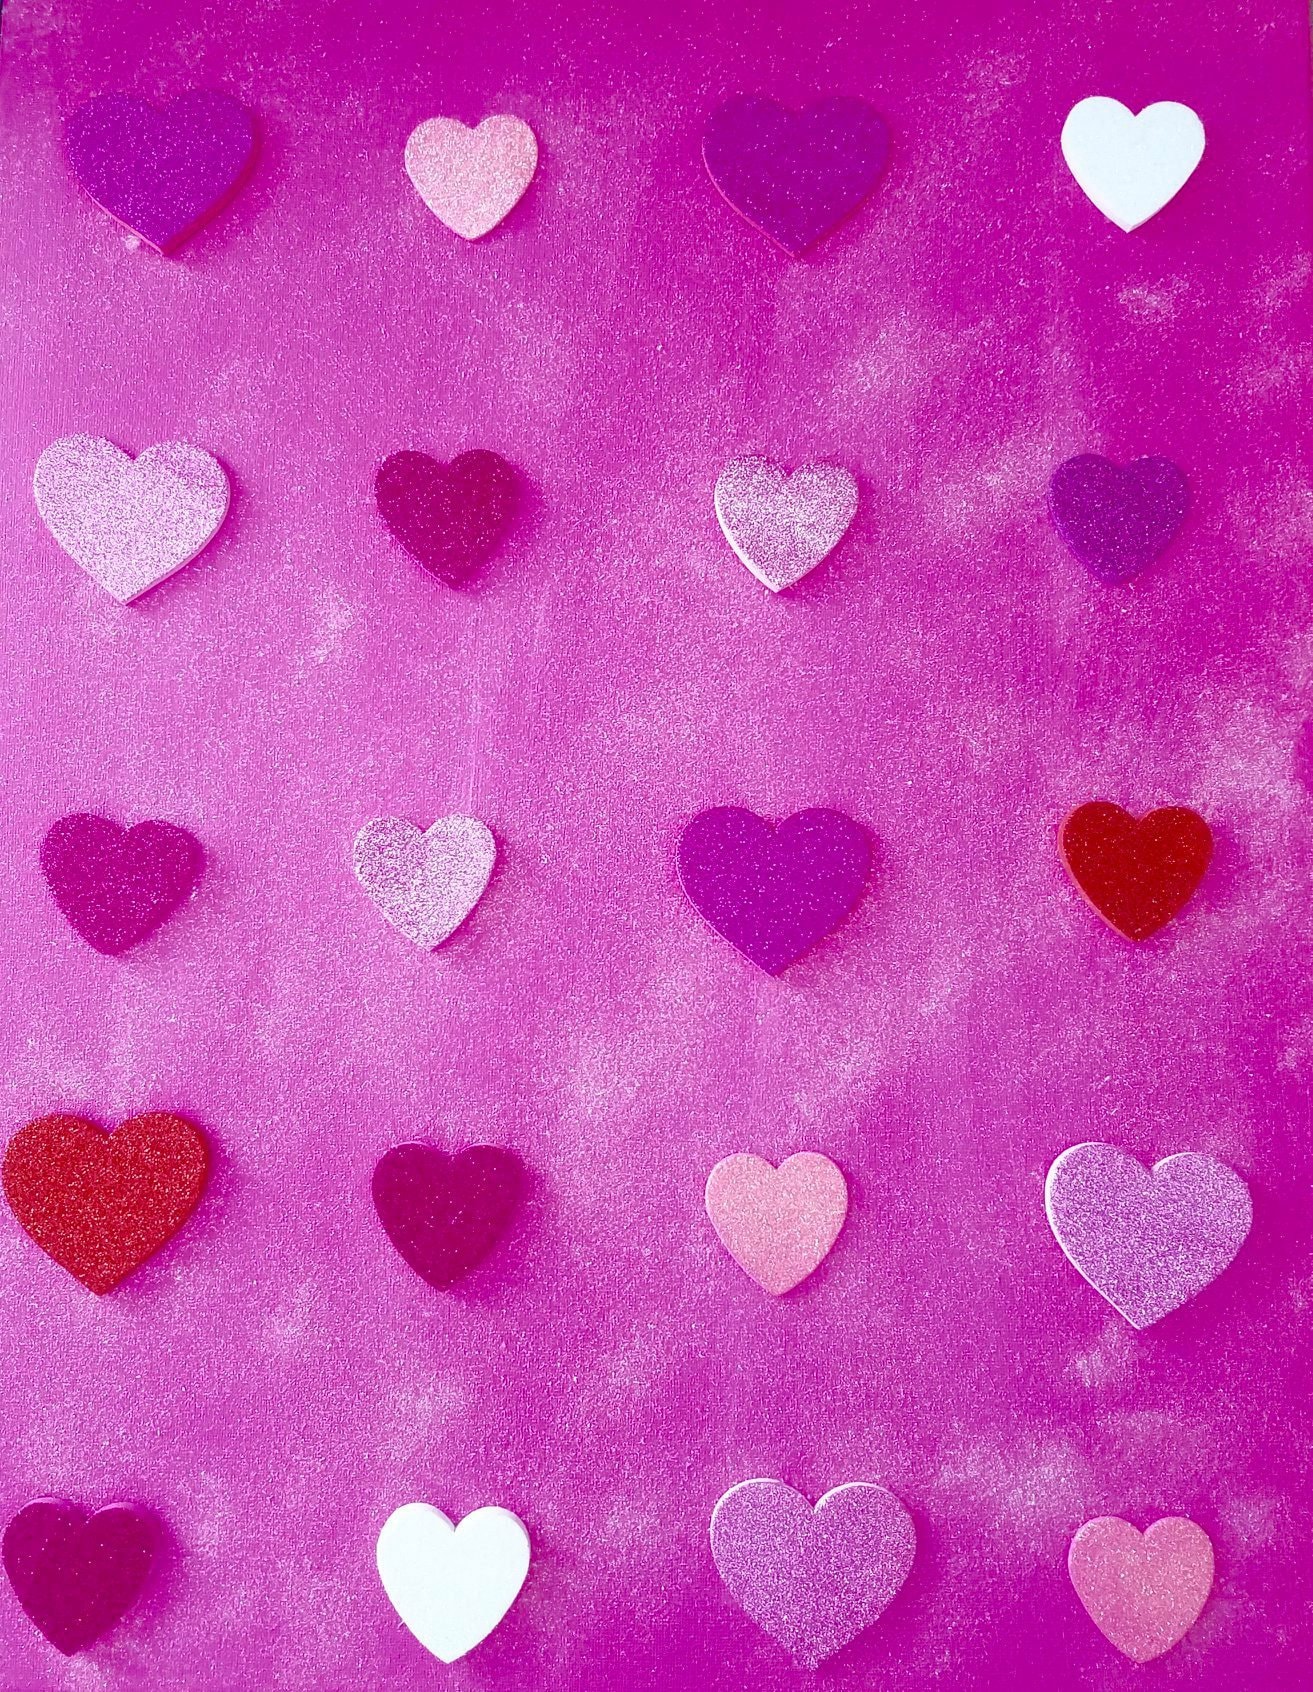 Pink Heart w DiamondsLive WallpaperMobile Screen  free download